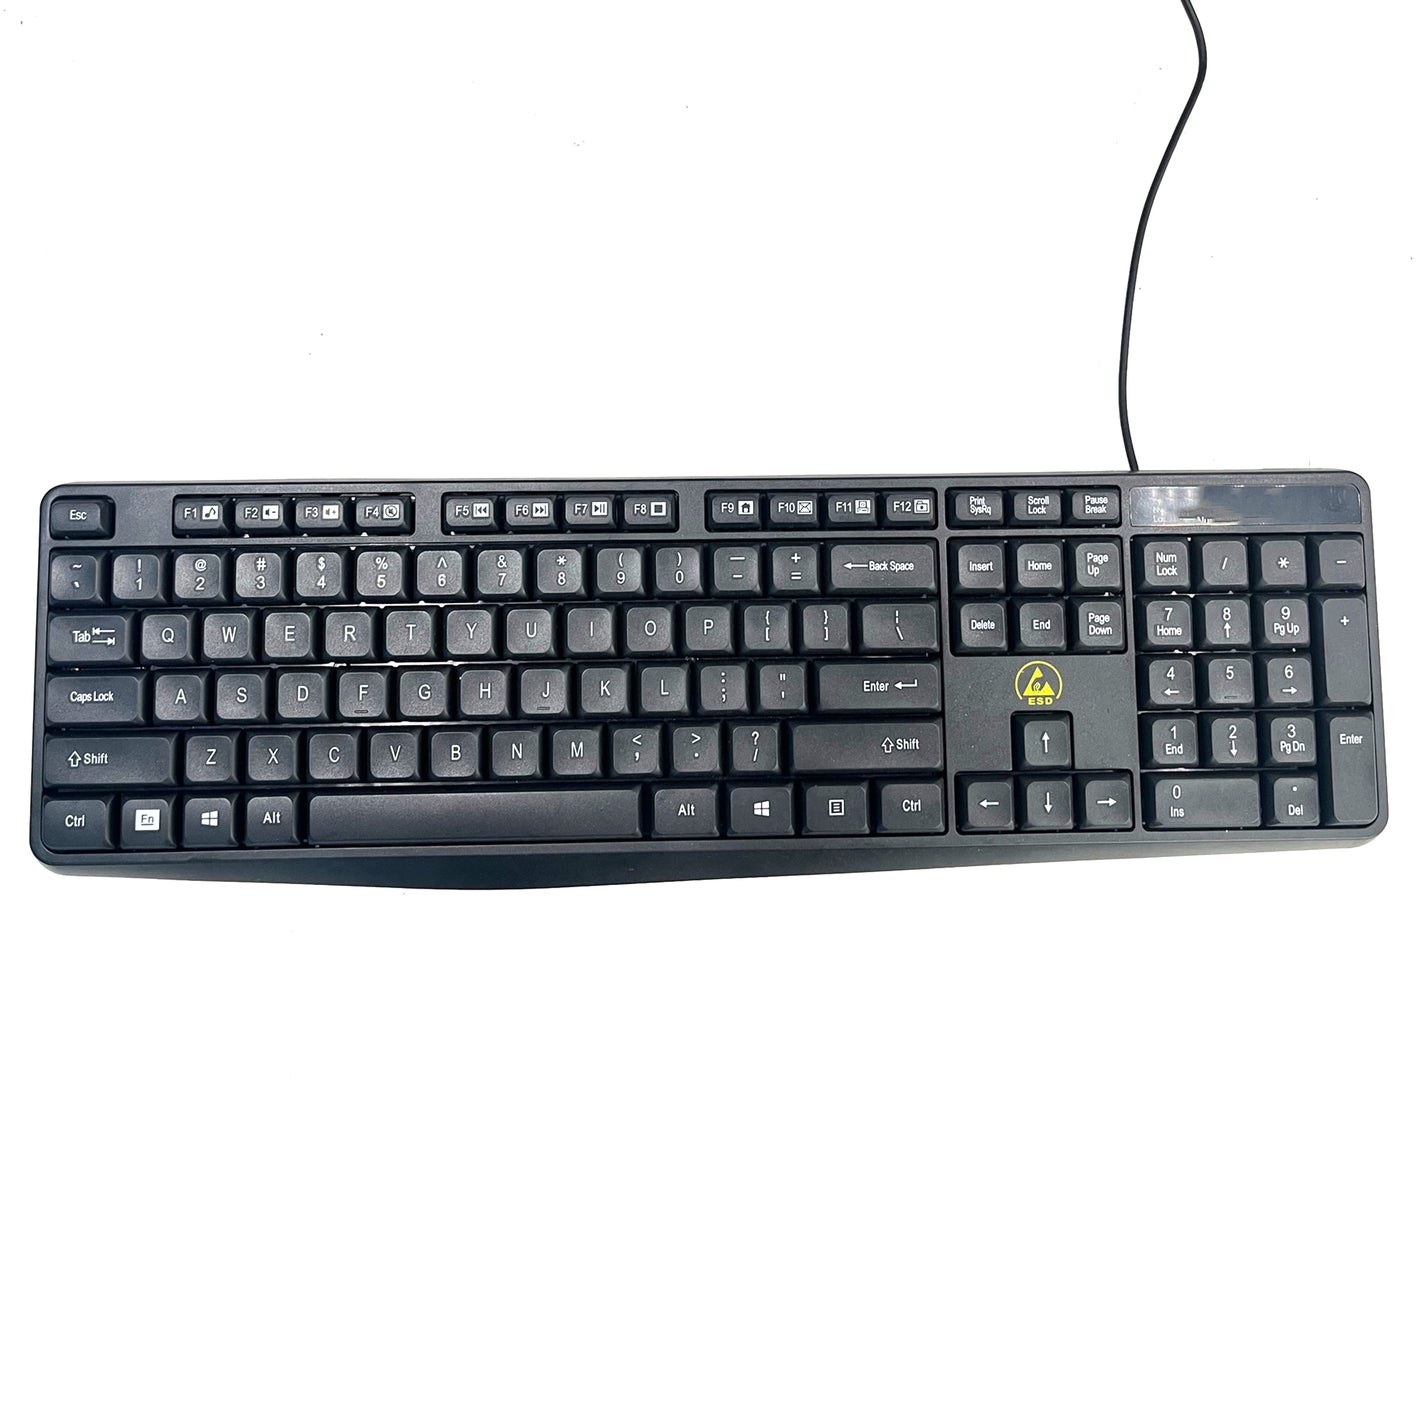 ESDBK2000 Anti-Static ESD Safe Keyboard